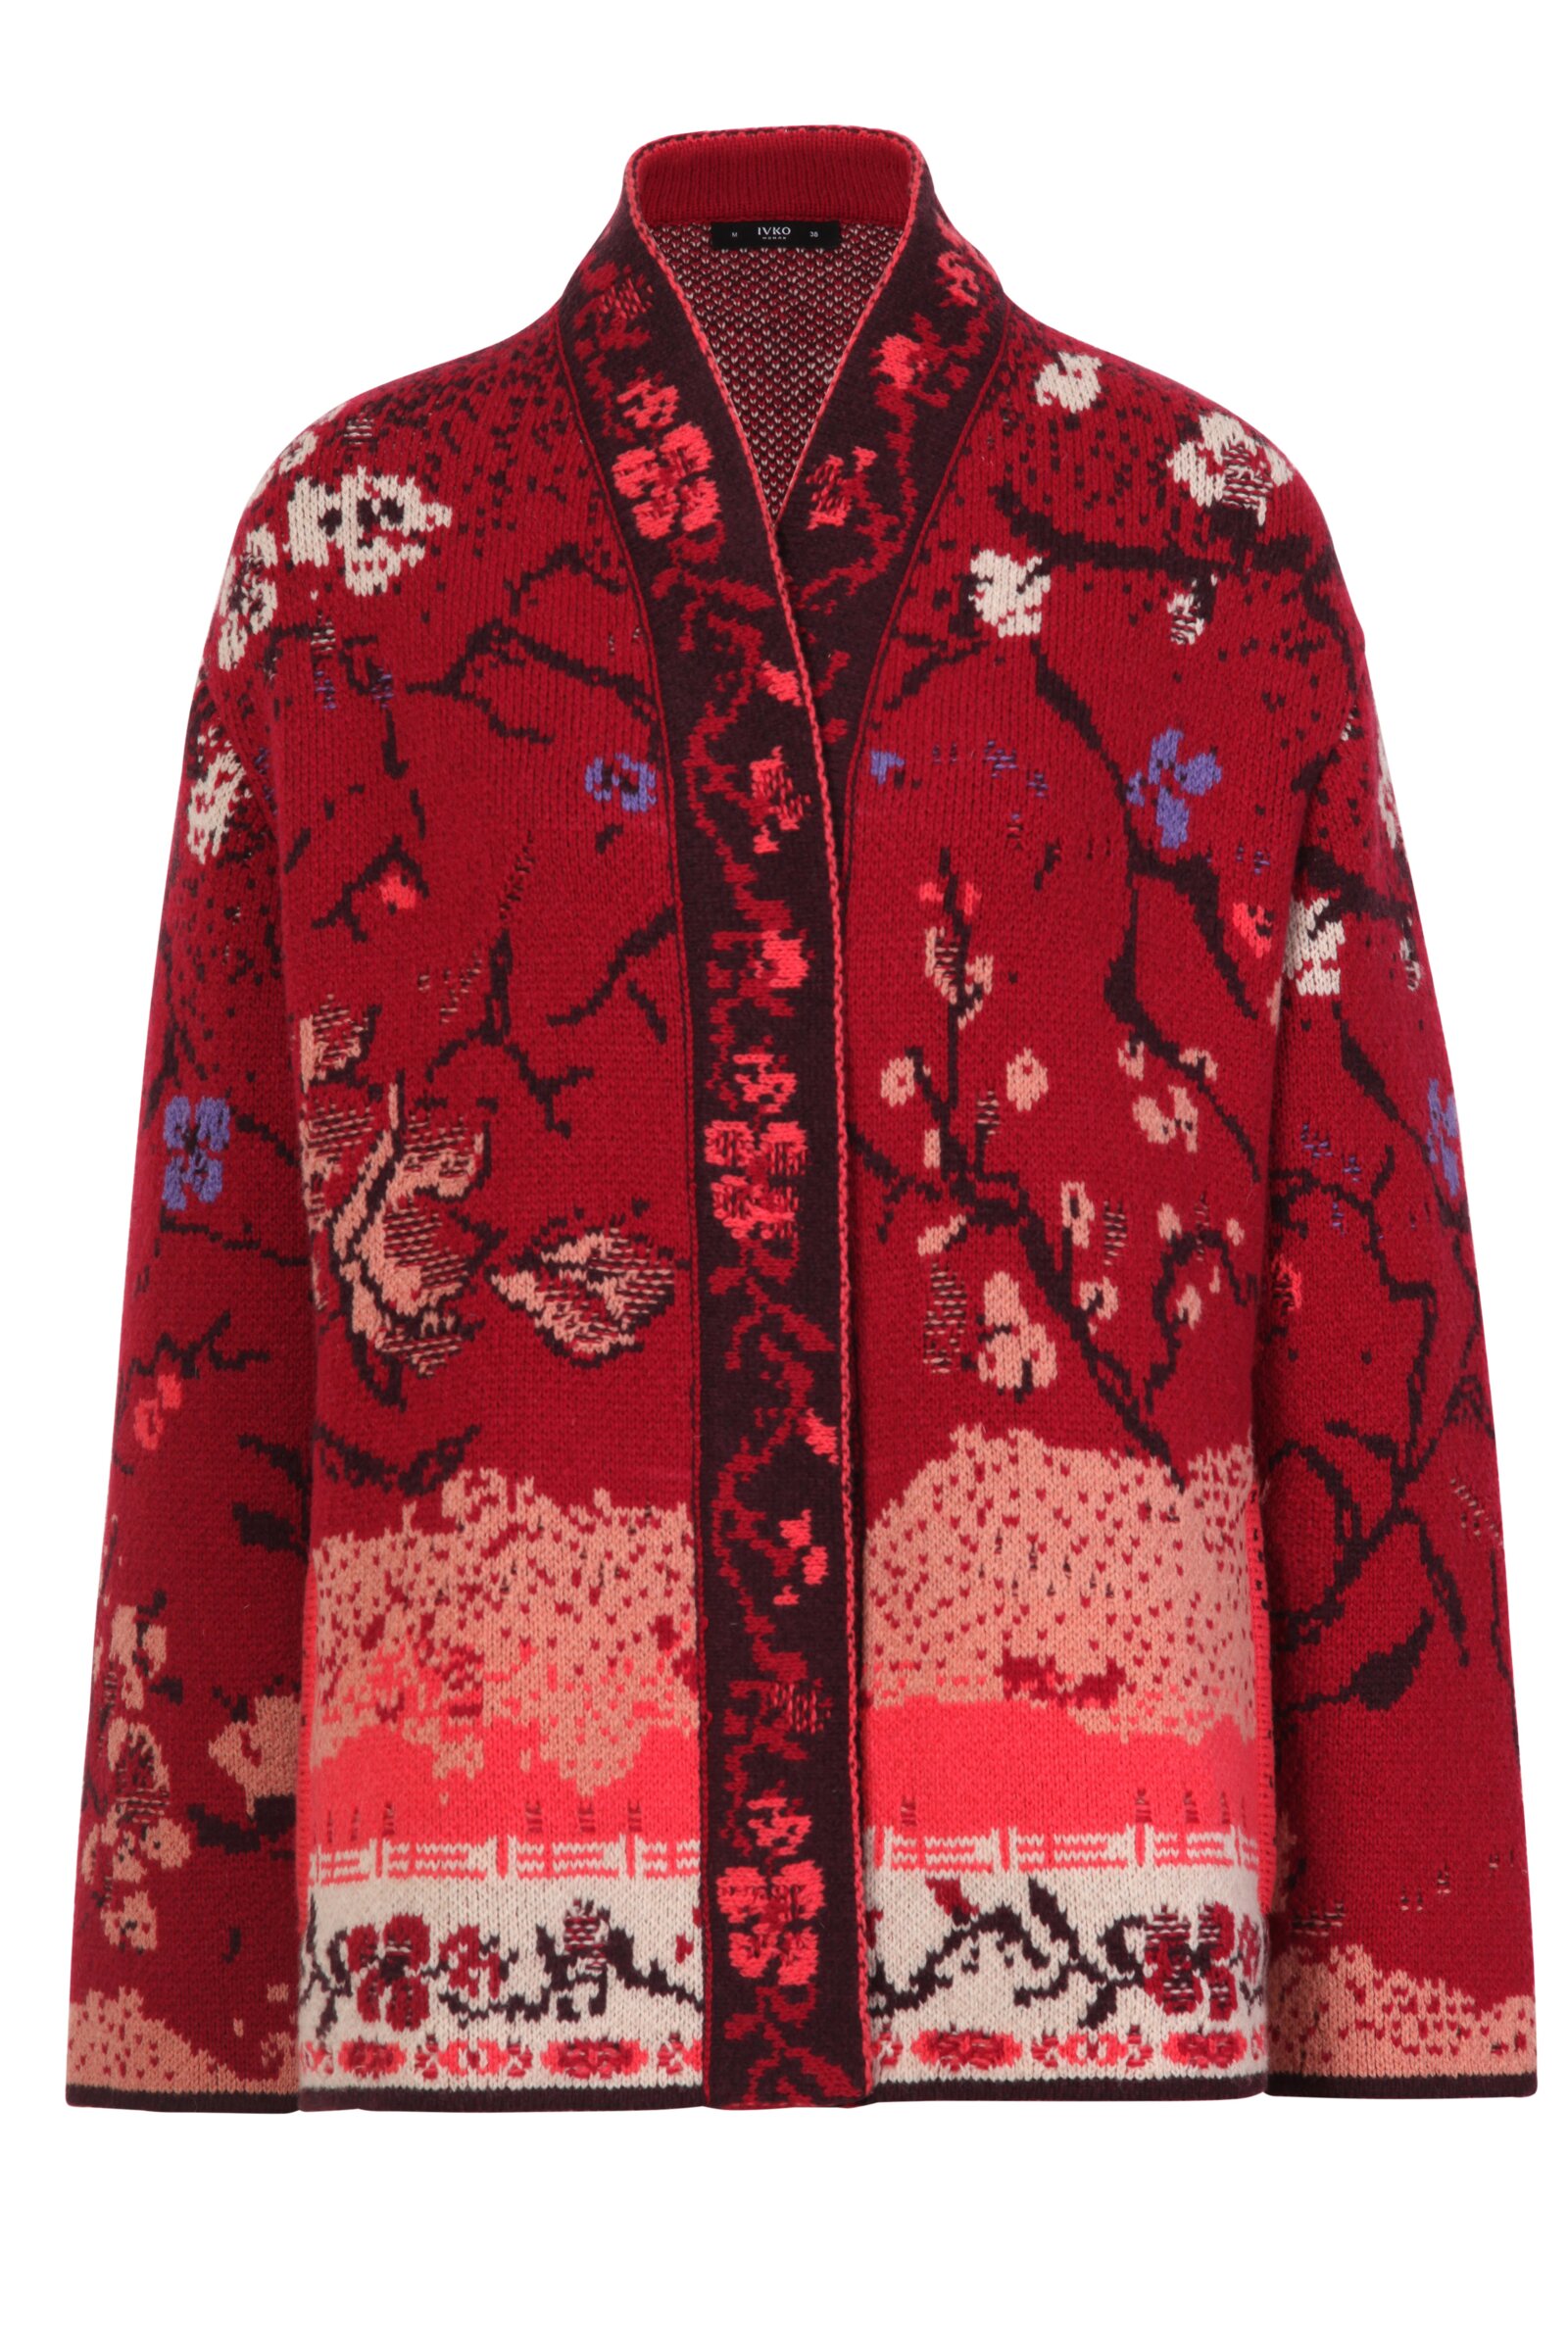 Jacquard Jacket, Cherry Blossom Pattern - Outerwear - Ivko Woman